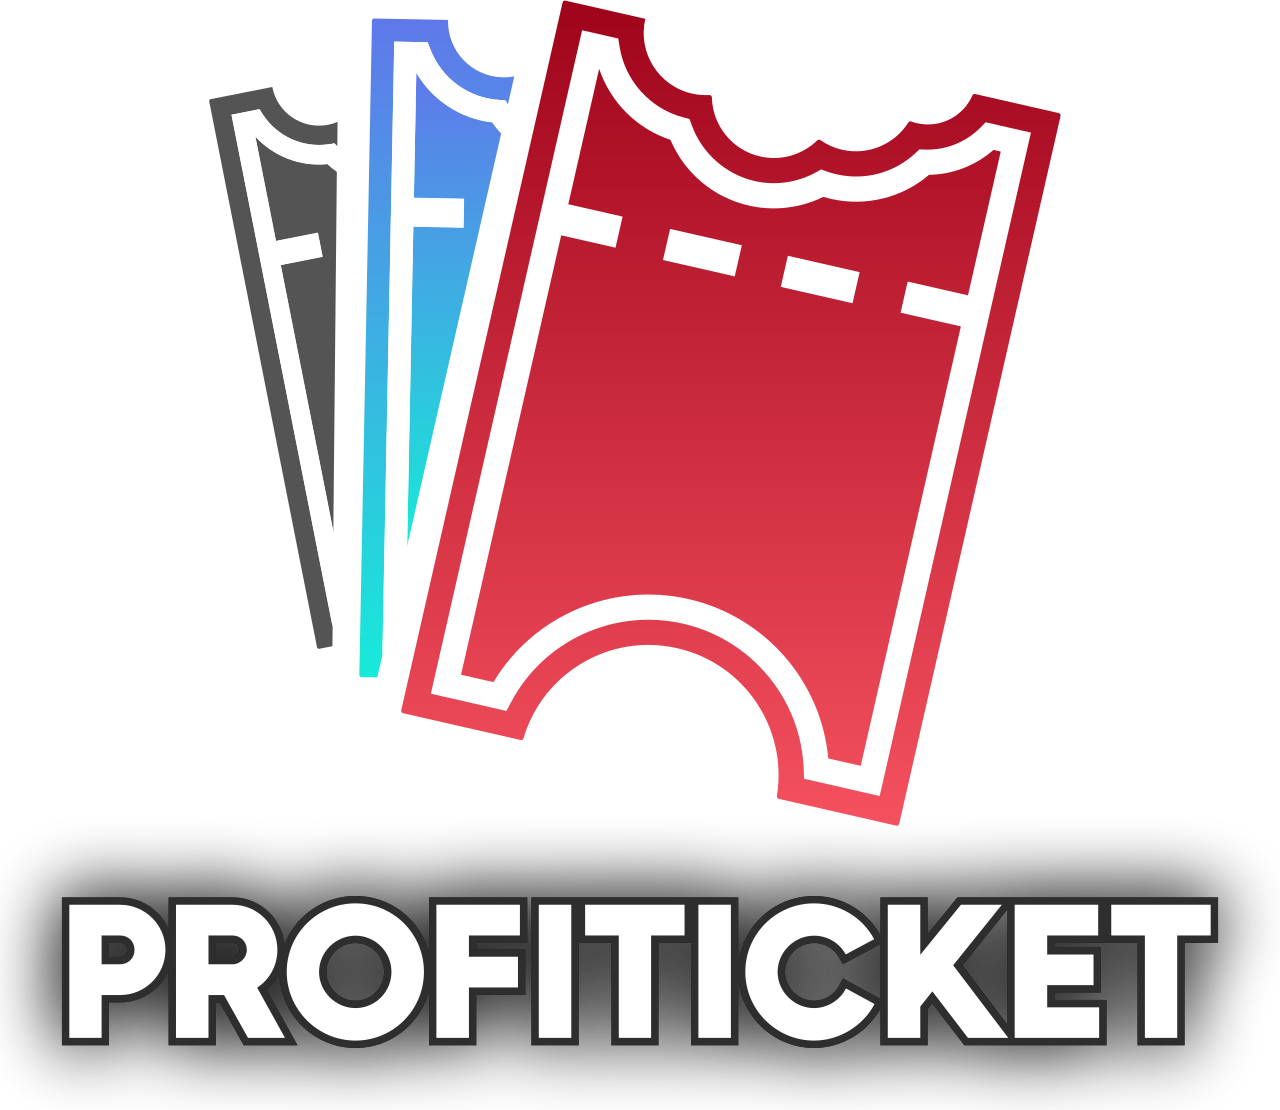 Profiticket's logo